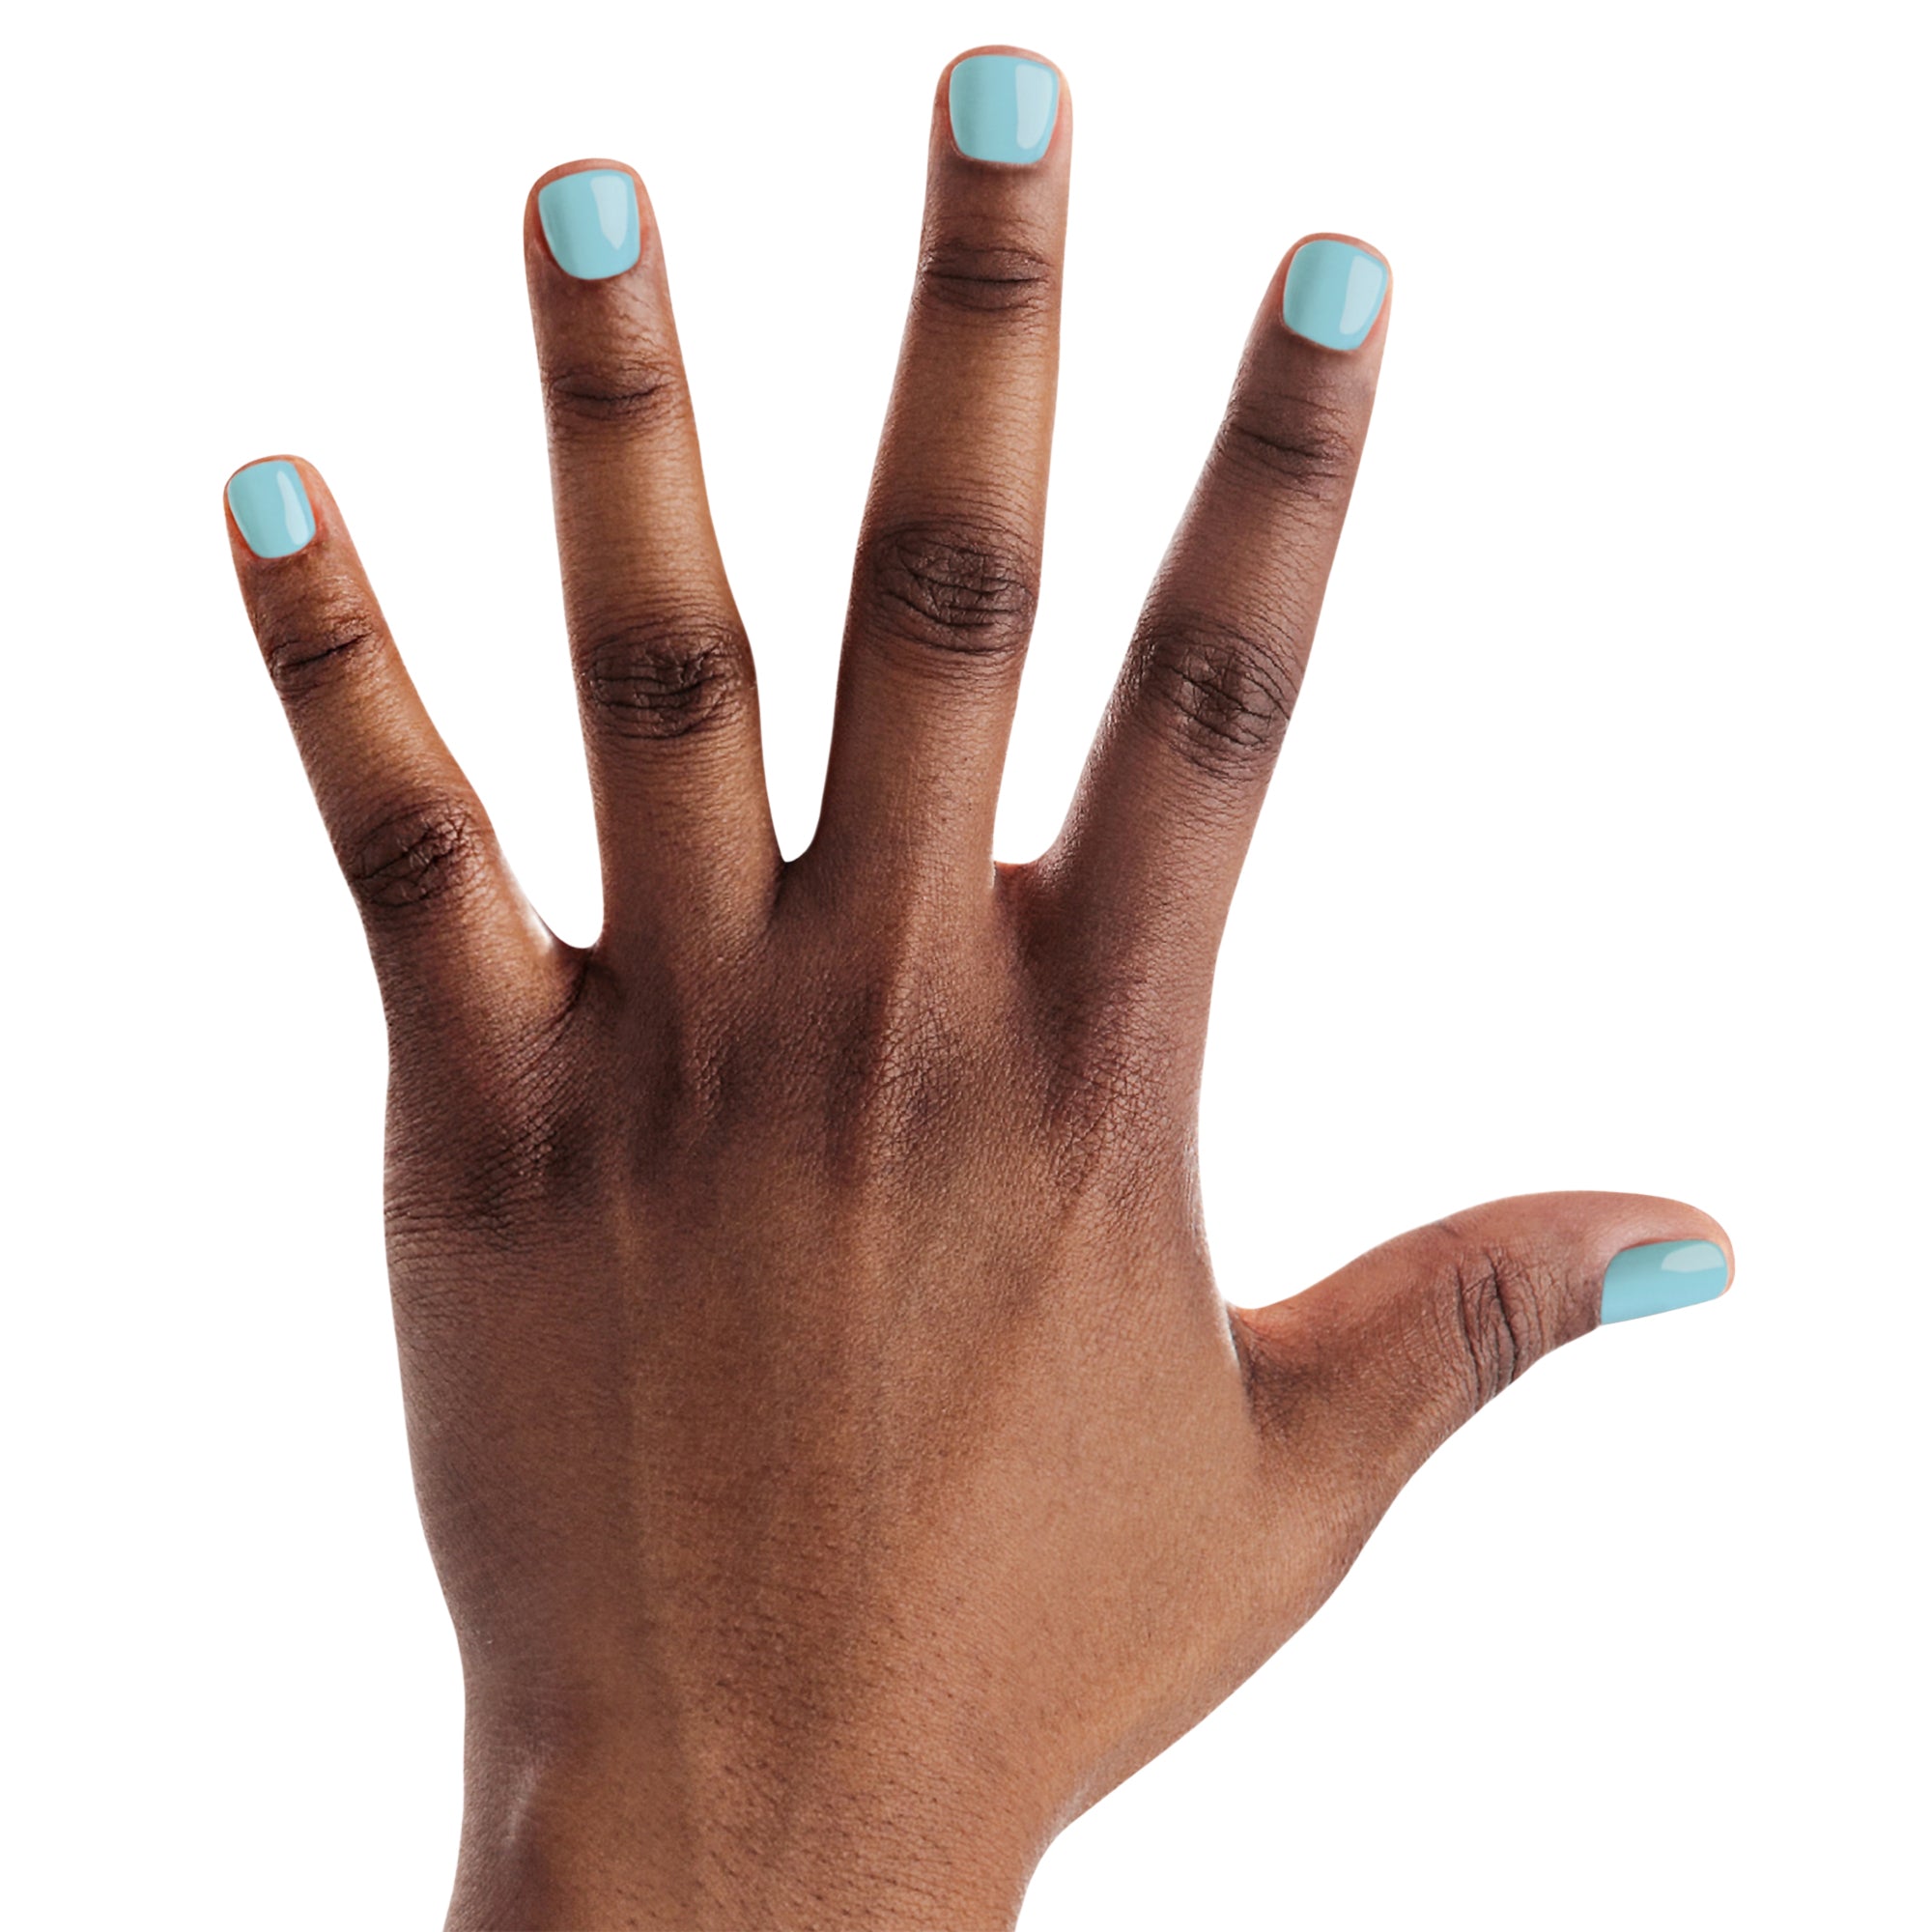 B L U E ❄️ | Blue acrylic nails, Powder blue nails, Blue gel nails